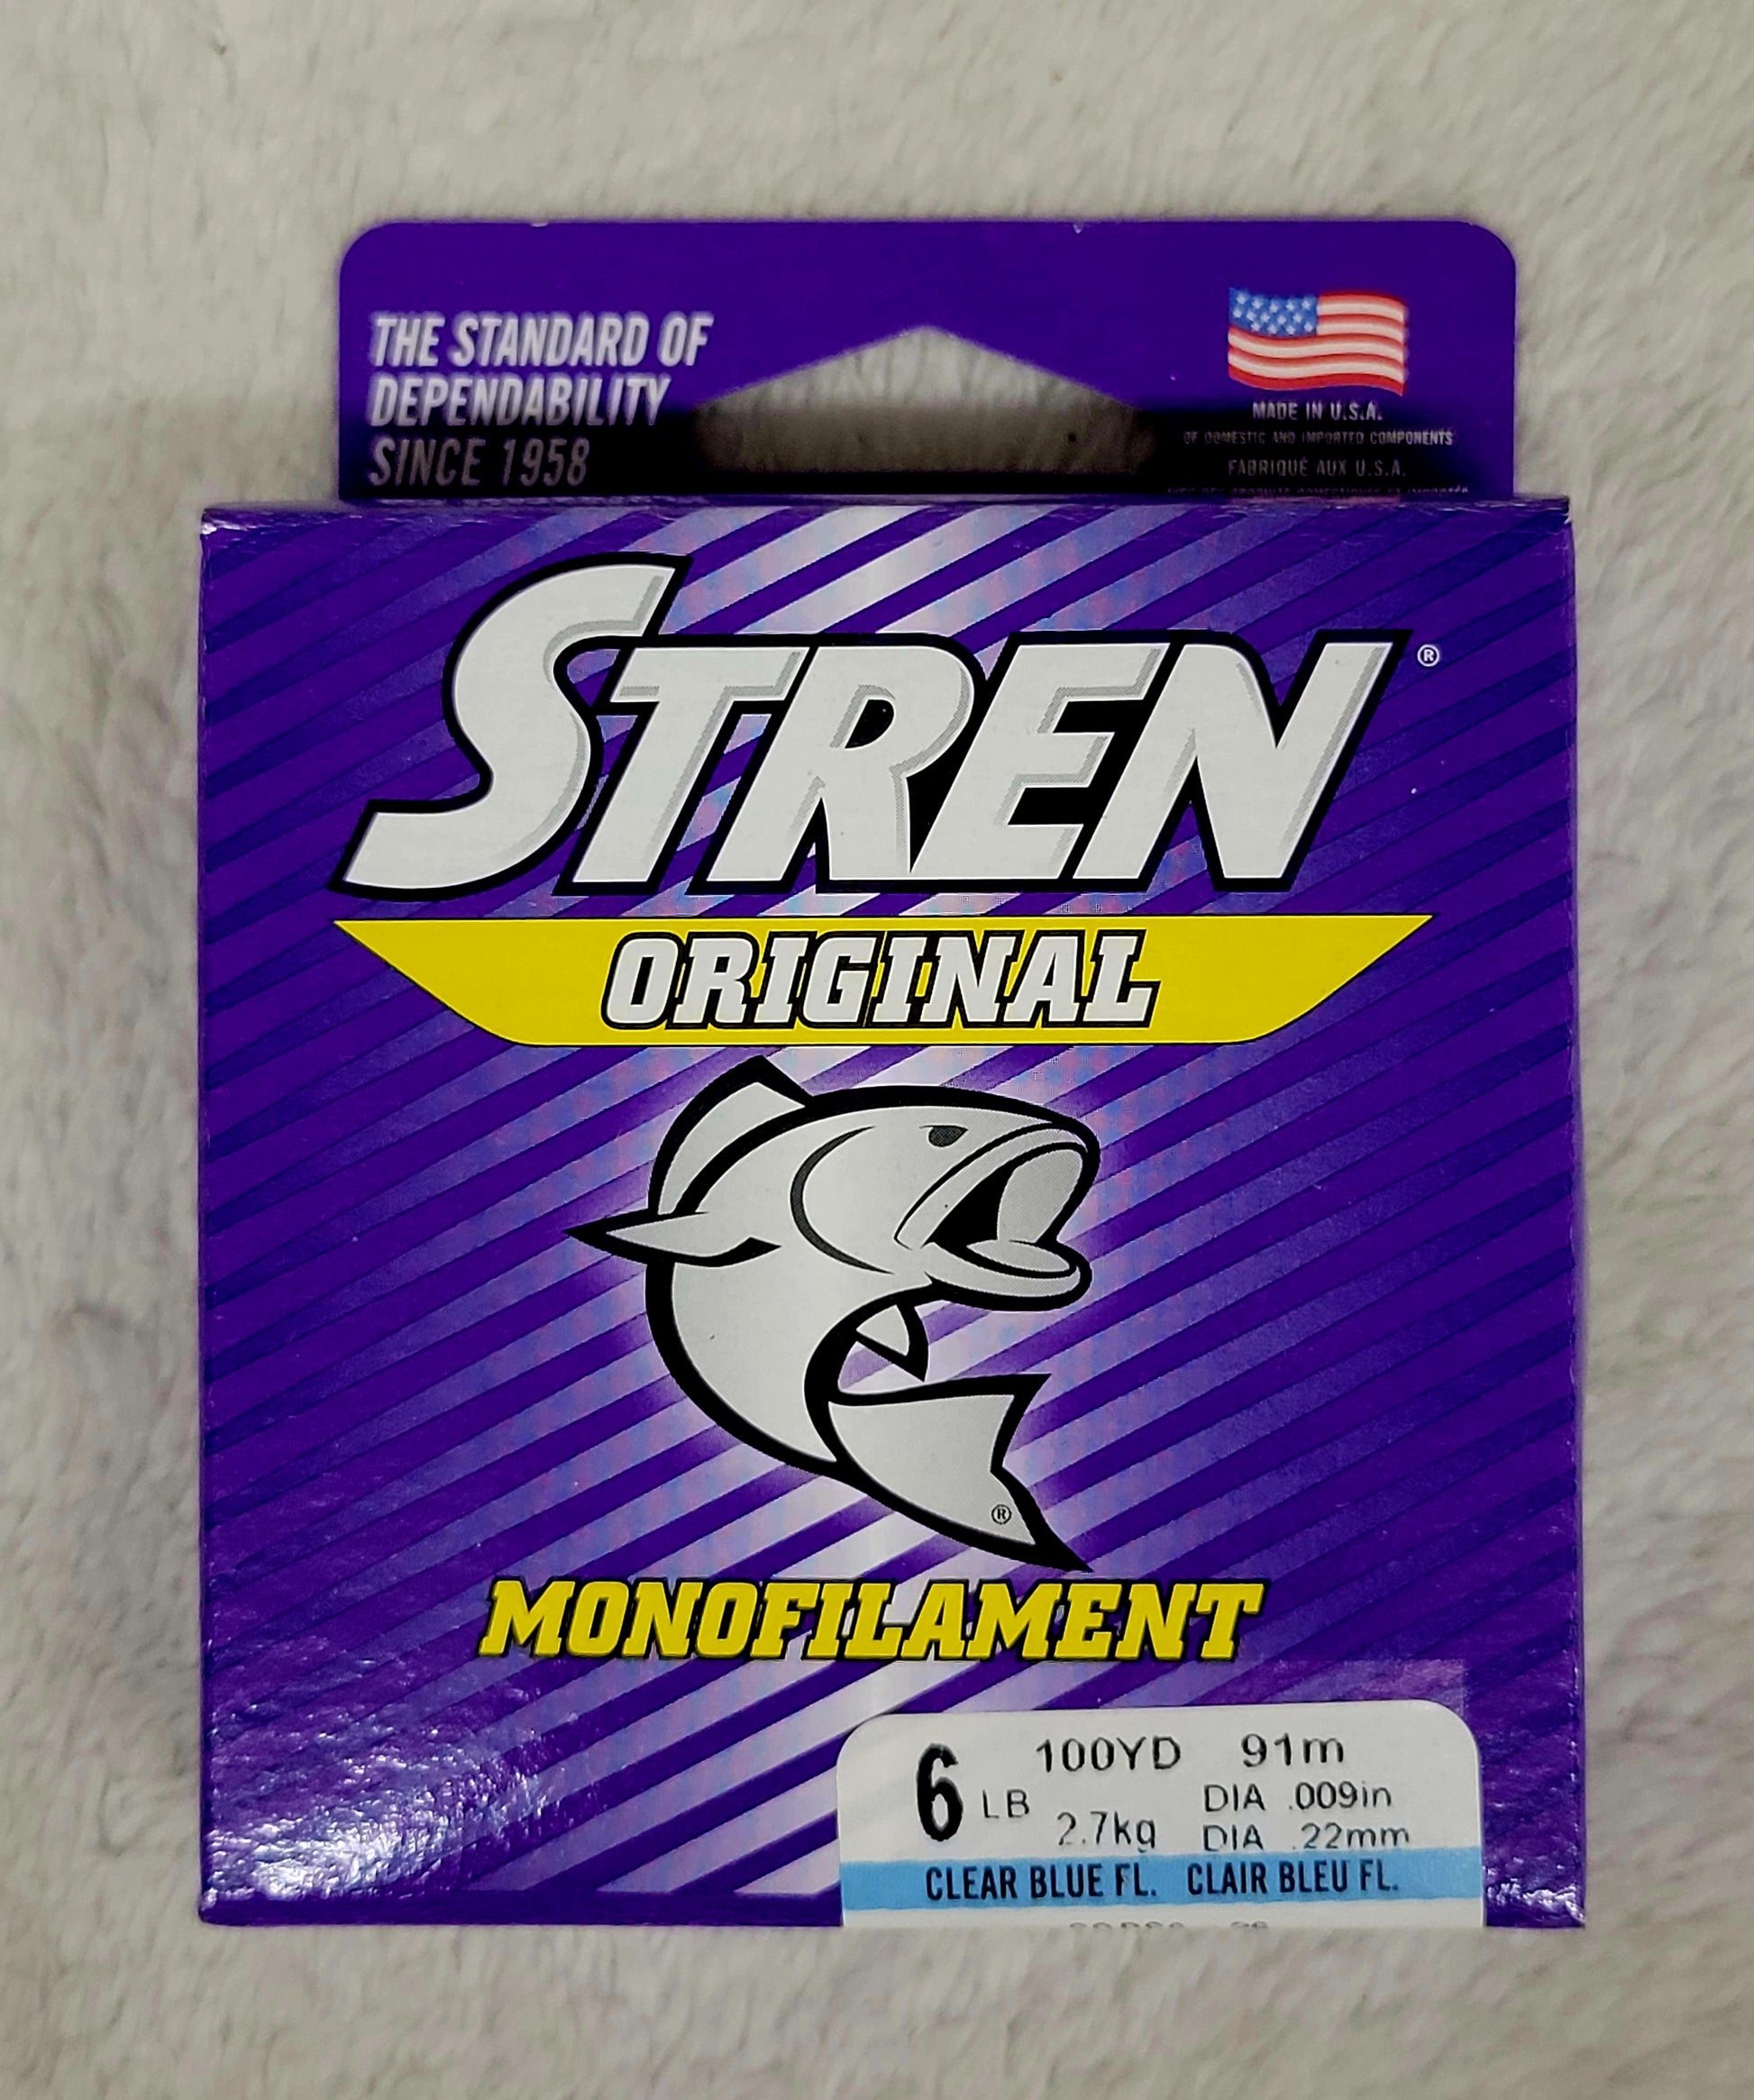 Stren Original Monofilament Fishing Line - Clear/Blue Fluorescent 6lb